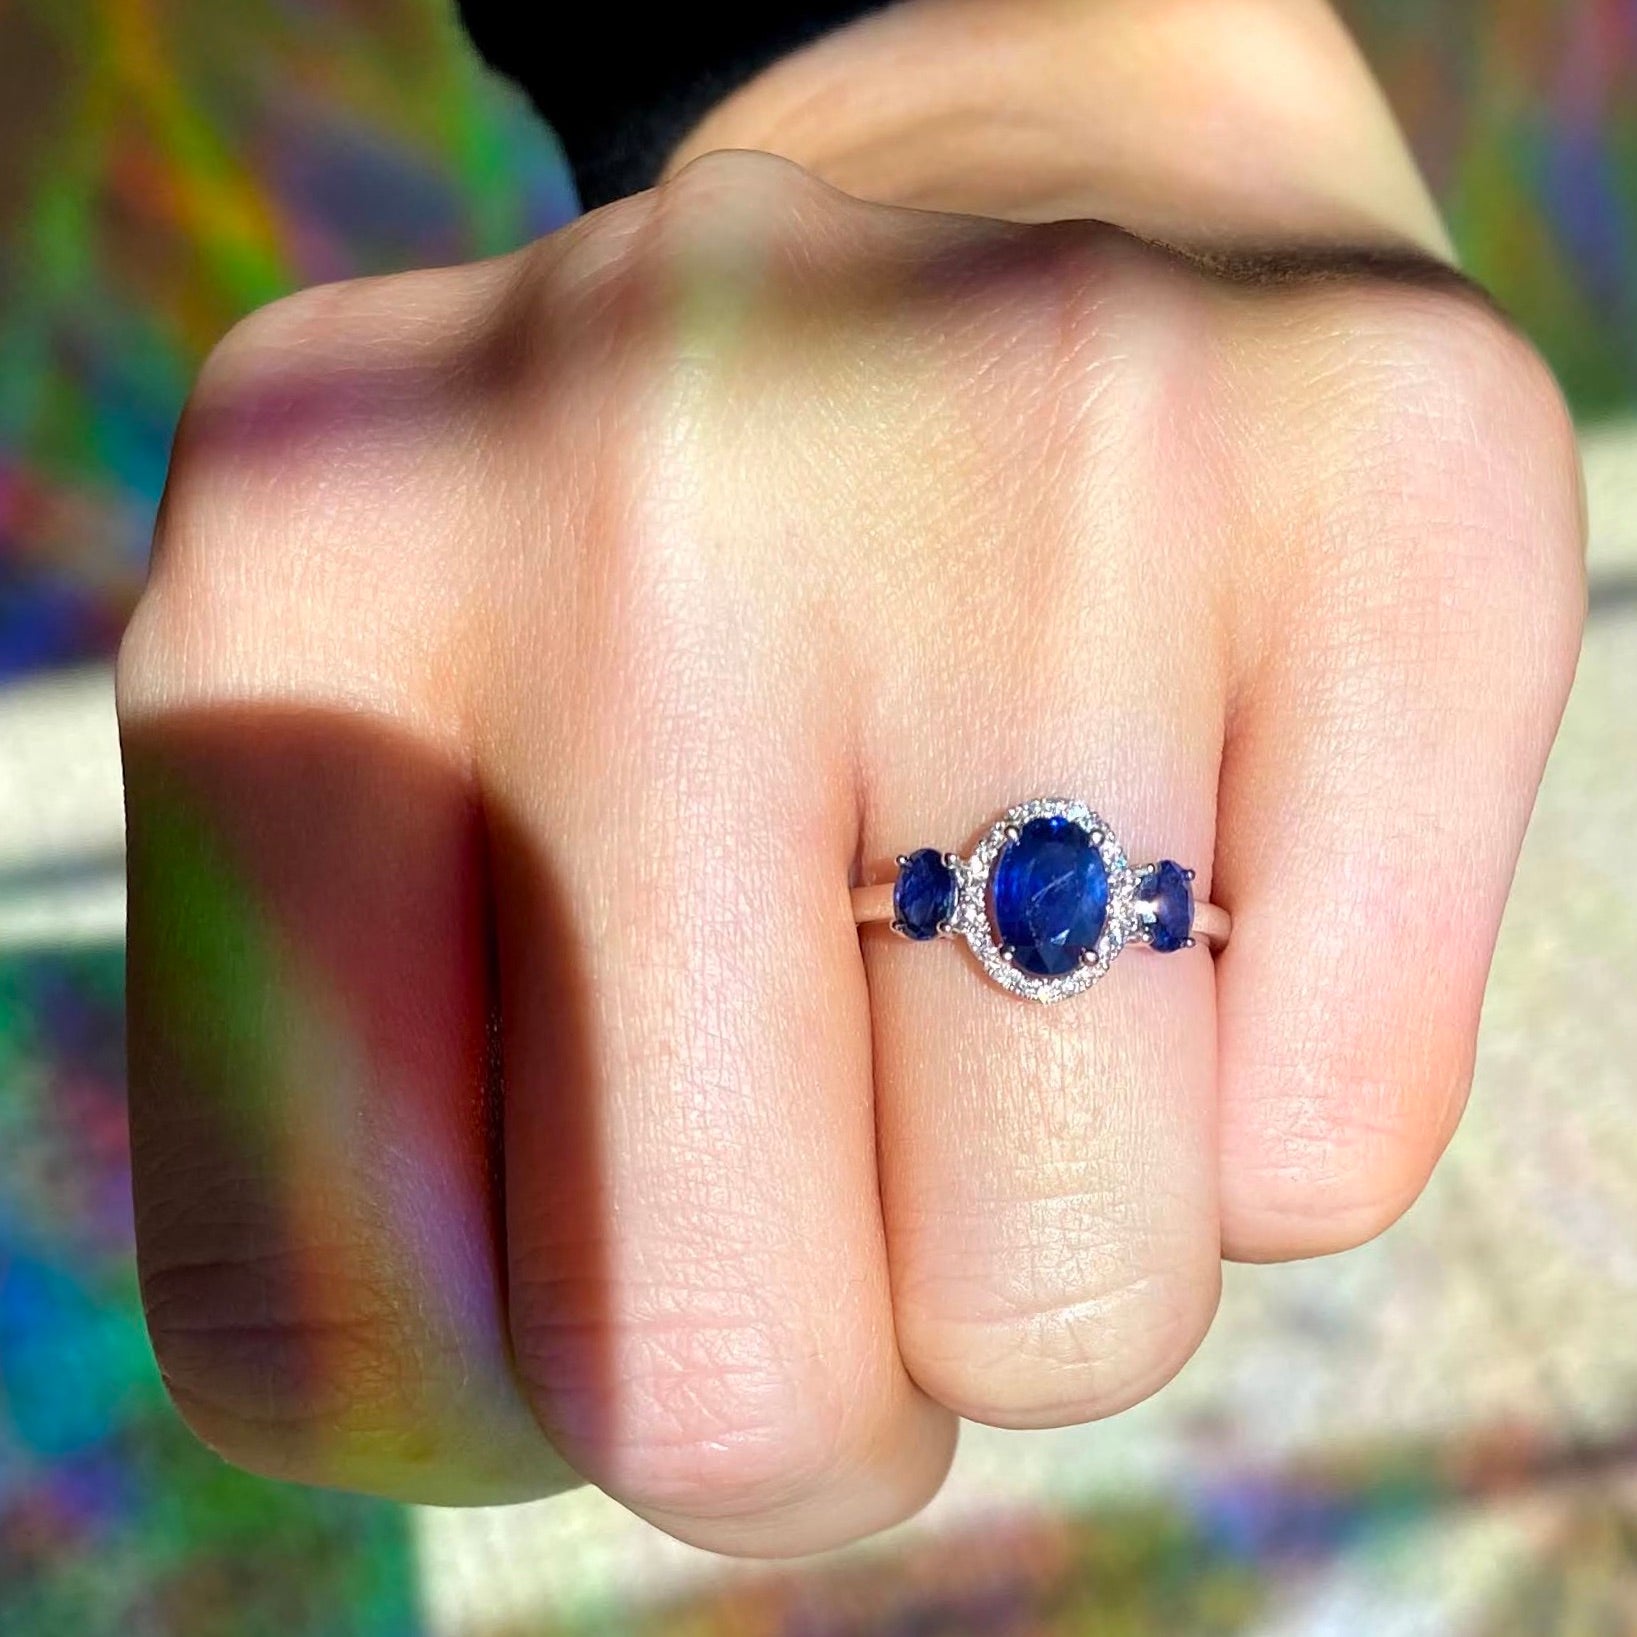 Blue Sapphire and Diamond 3-Stone Ring